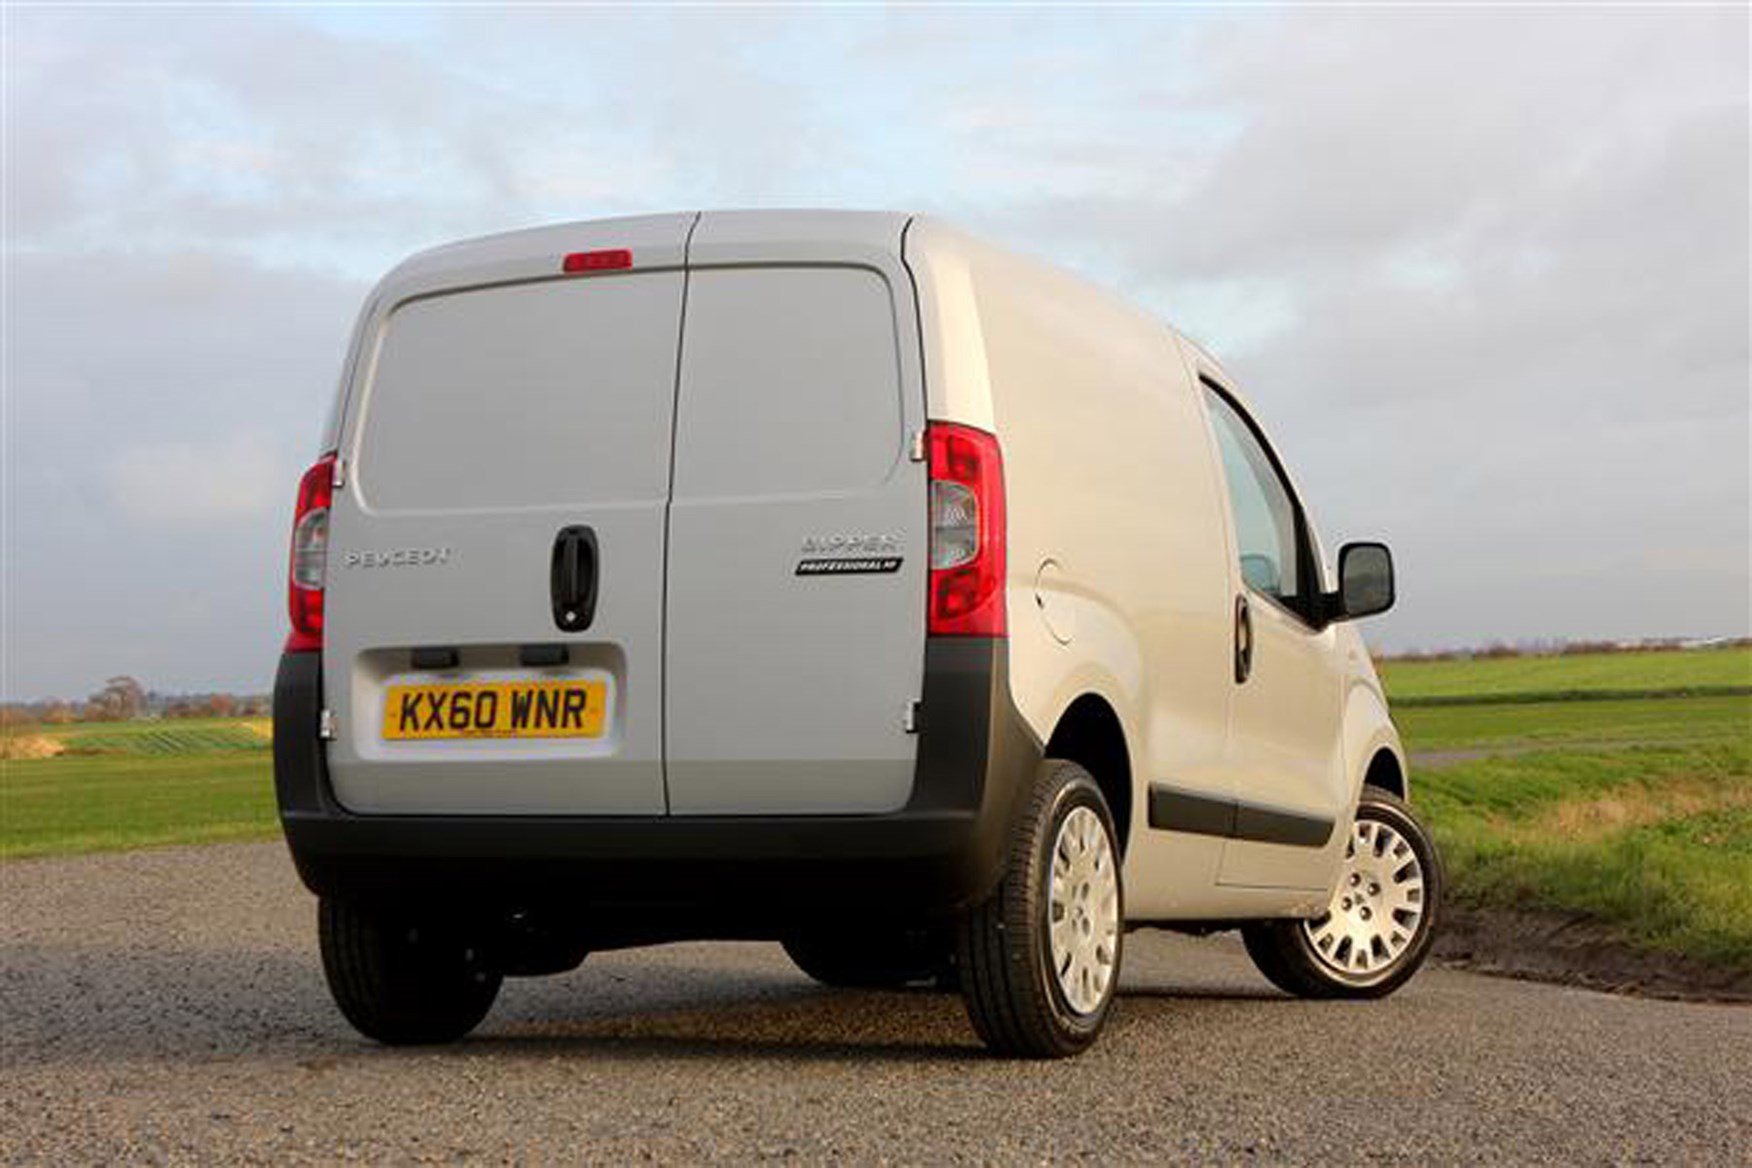 Peugeot Bipper review on Parkers Vans - rear exterior